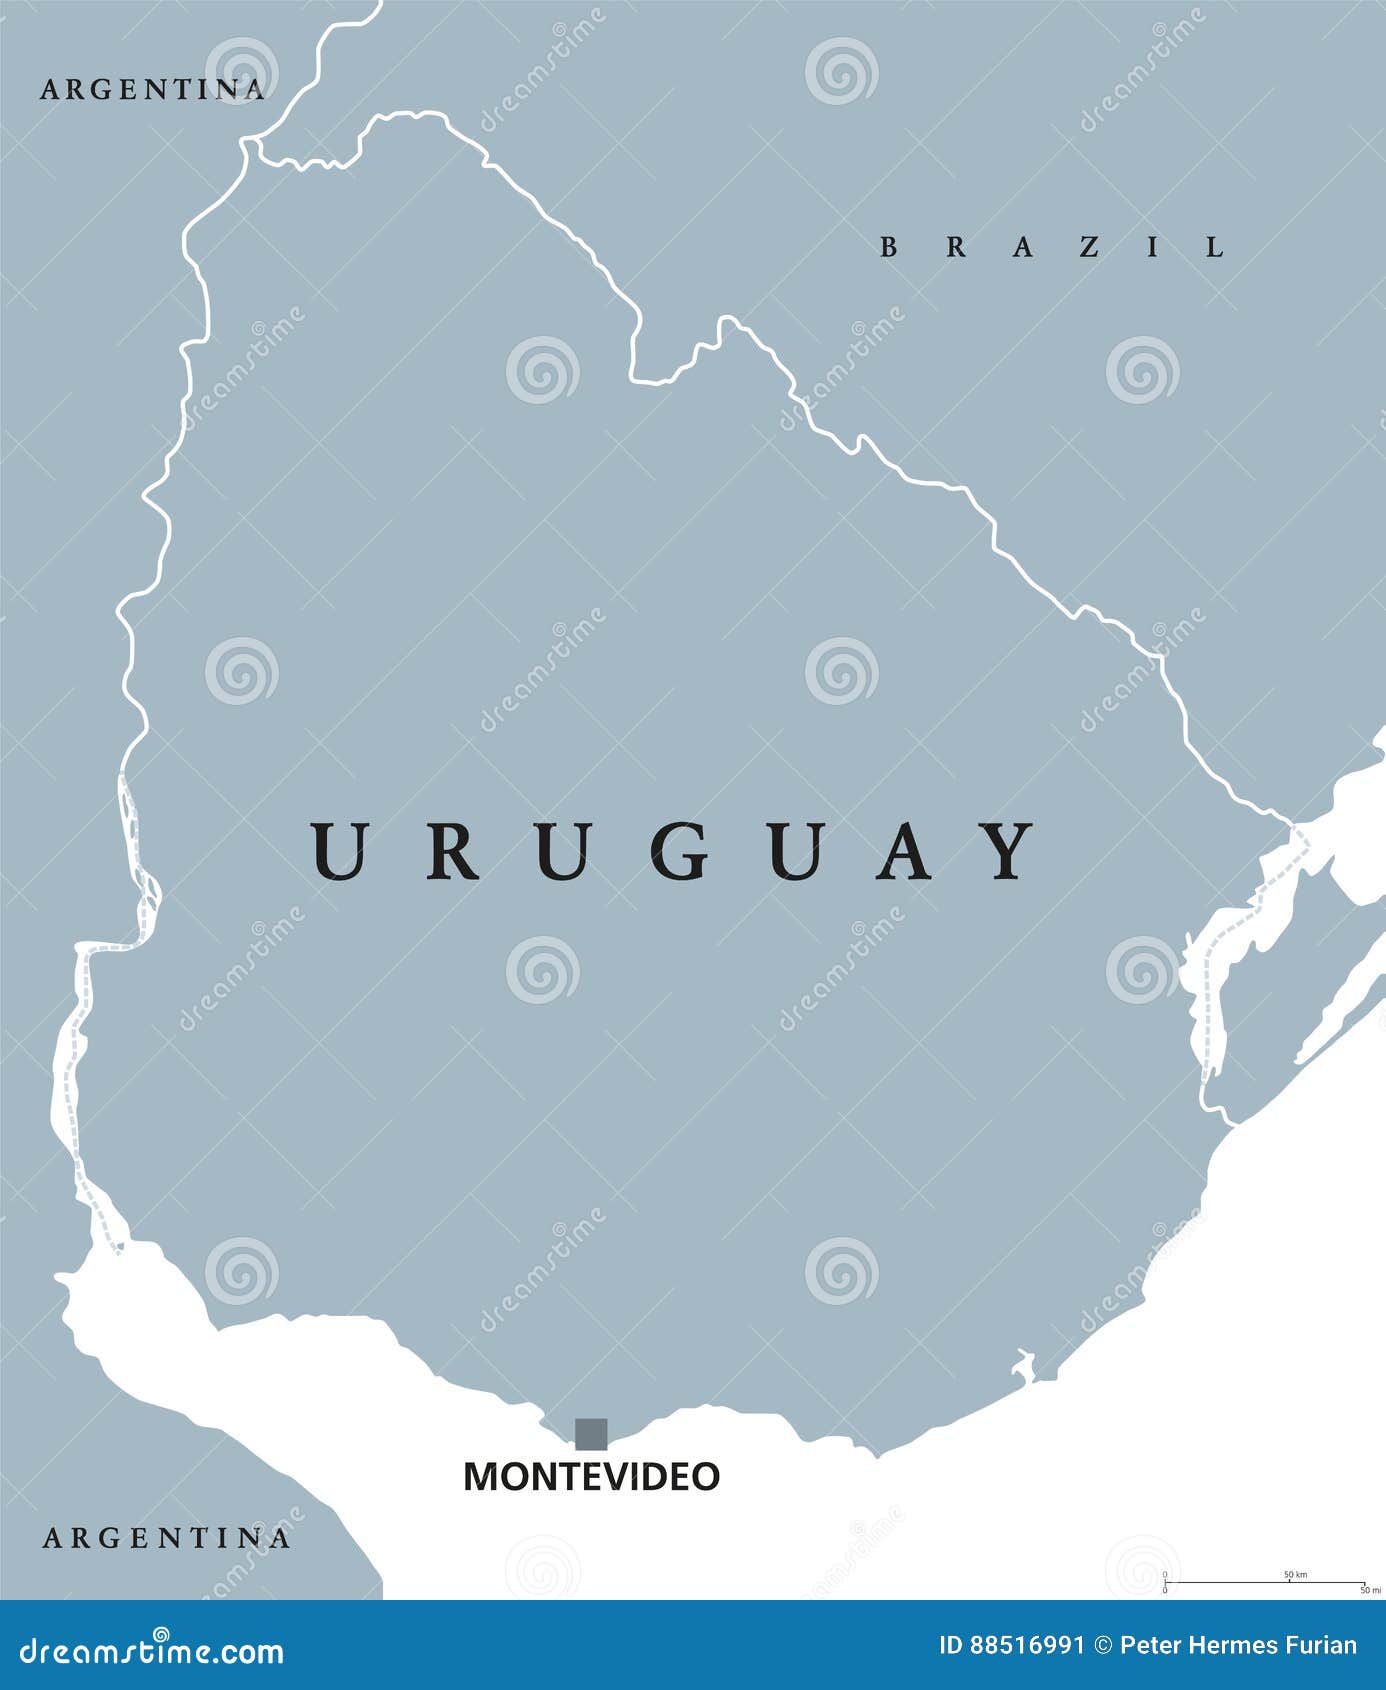 uruguay political map